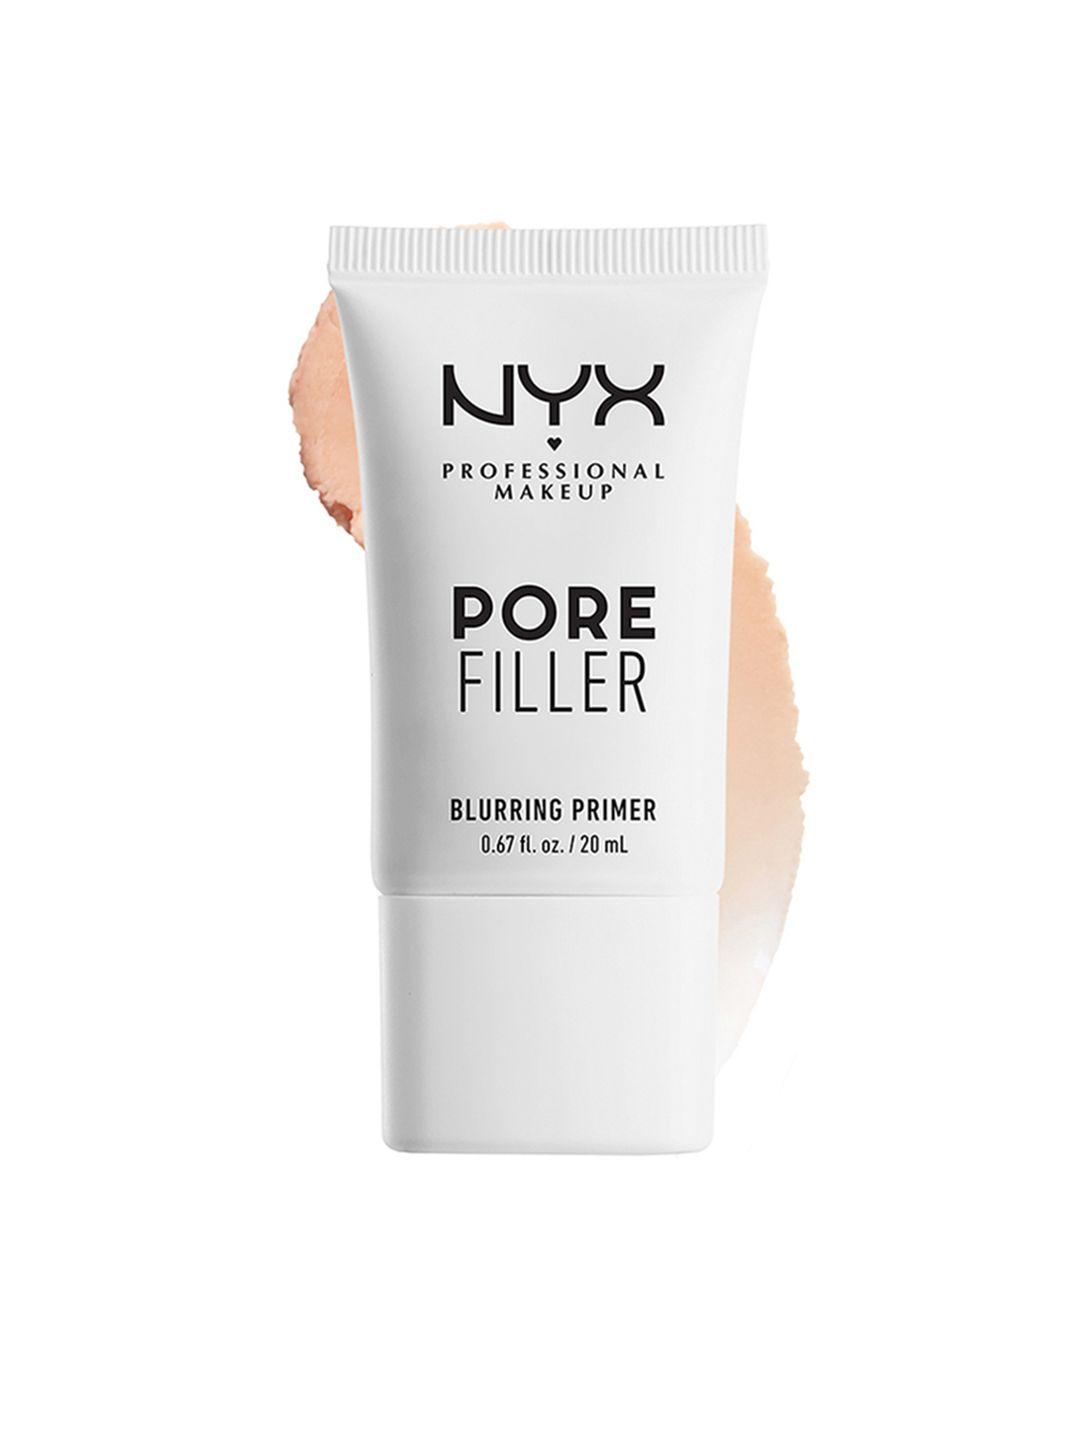 nyx professional makeup pore filler blurring primer with vitamin e - 20ml